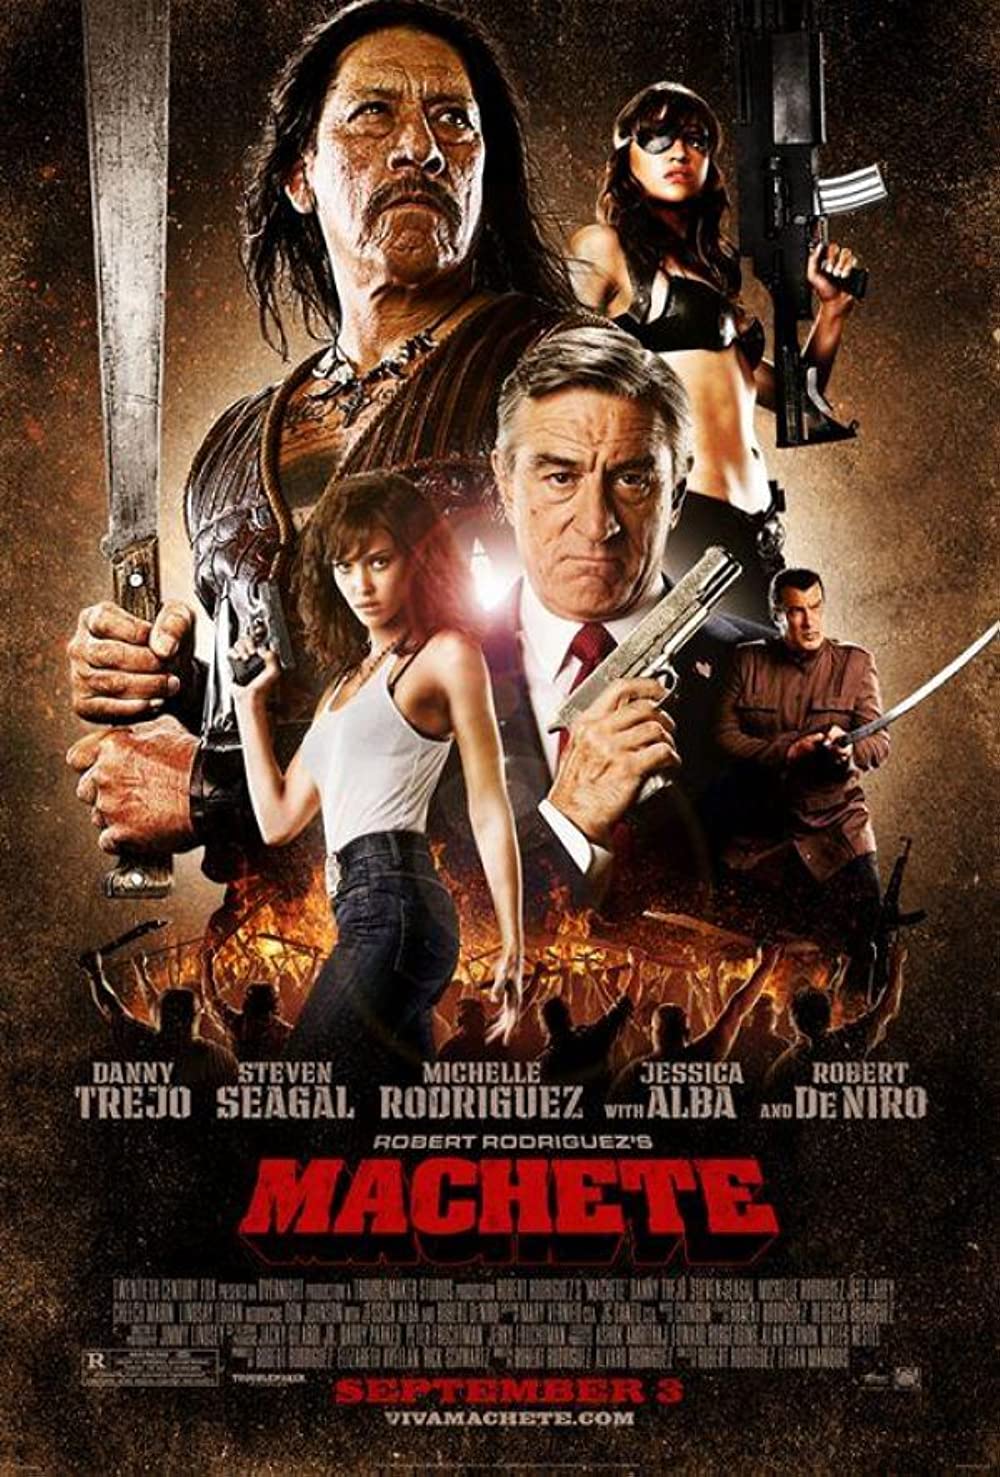 FULL MOVIE: Machete (2010) [Action]